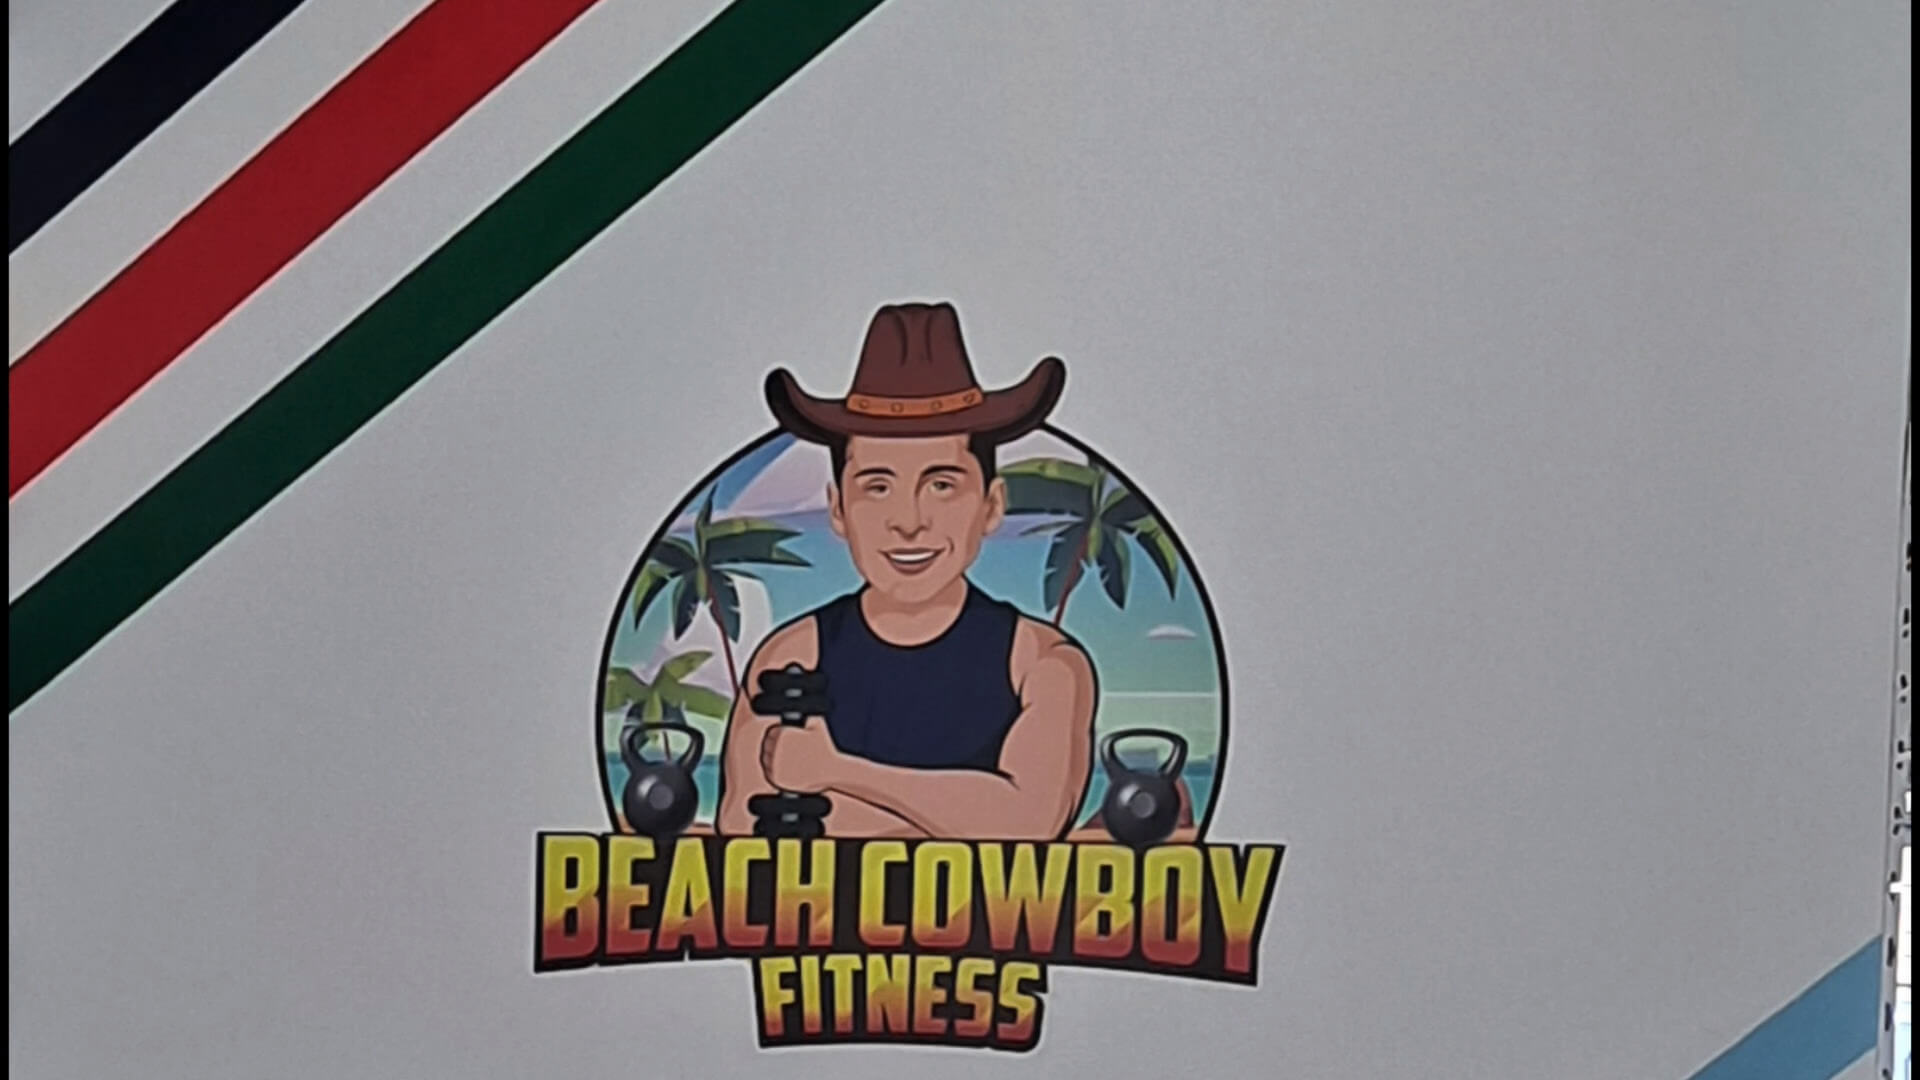 Beach Cowboy Fitness